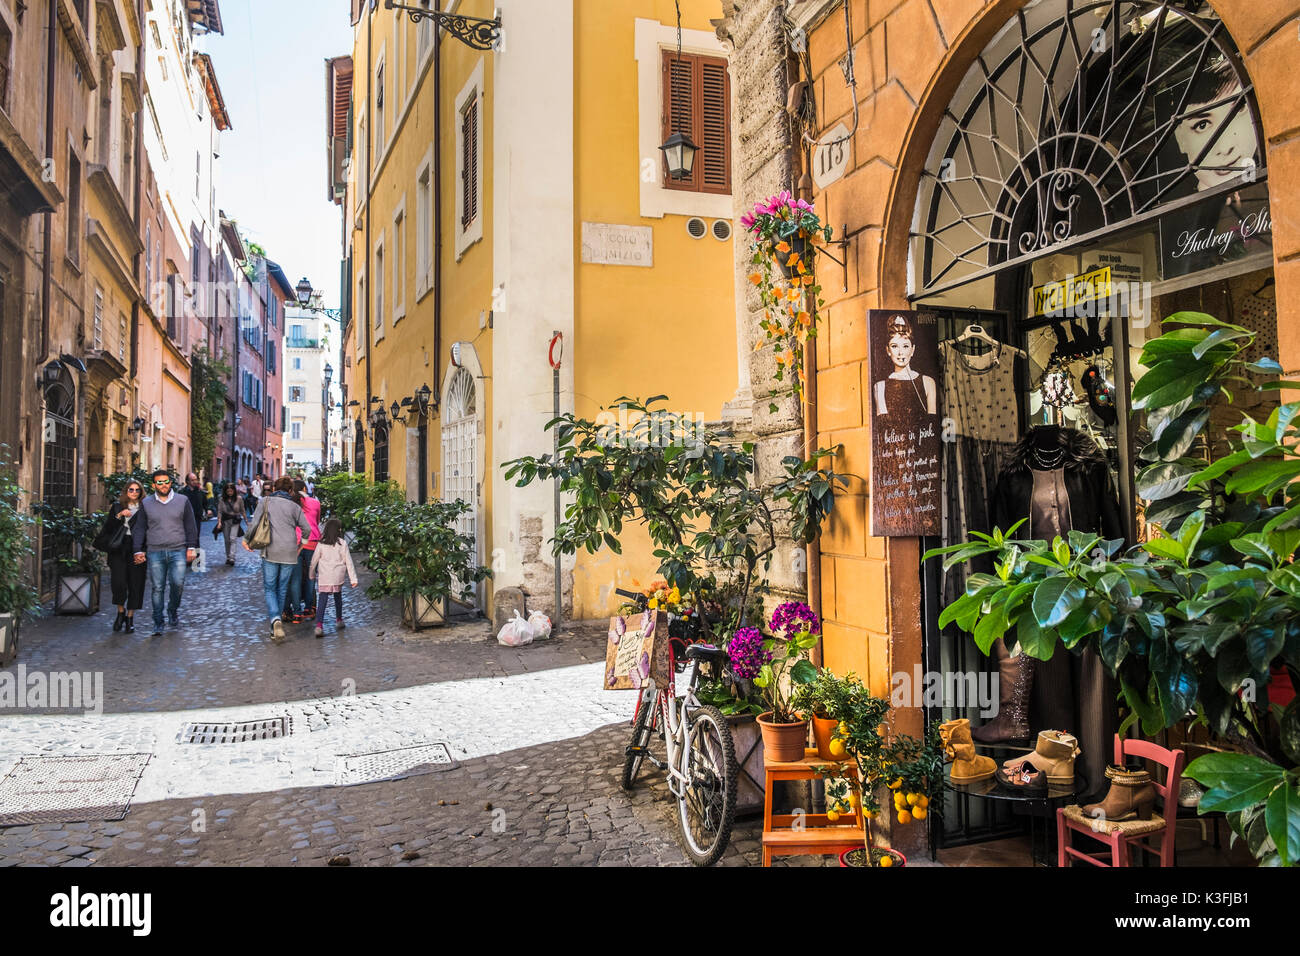 street scene in the historic city center, centro storico Stock Photo